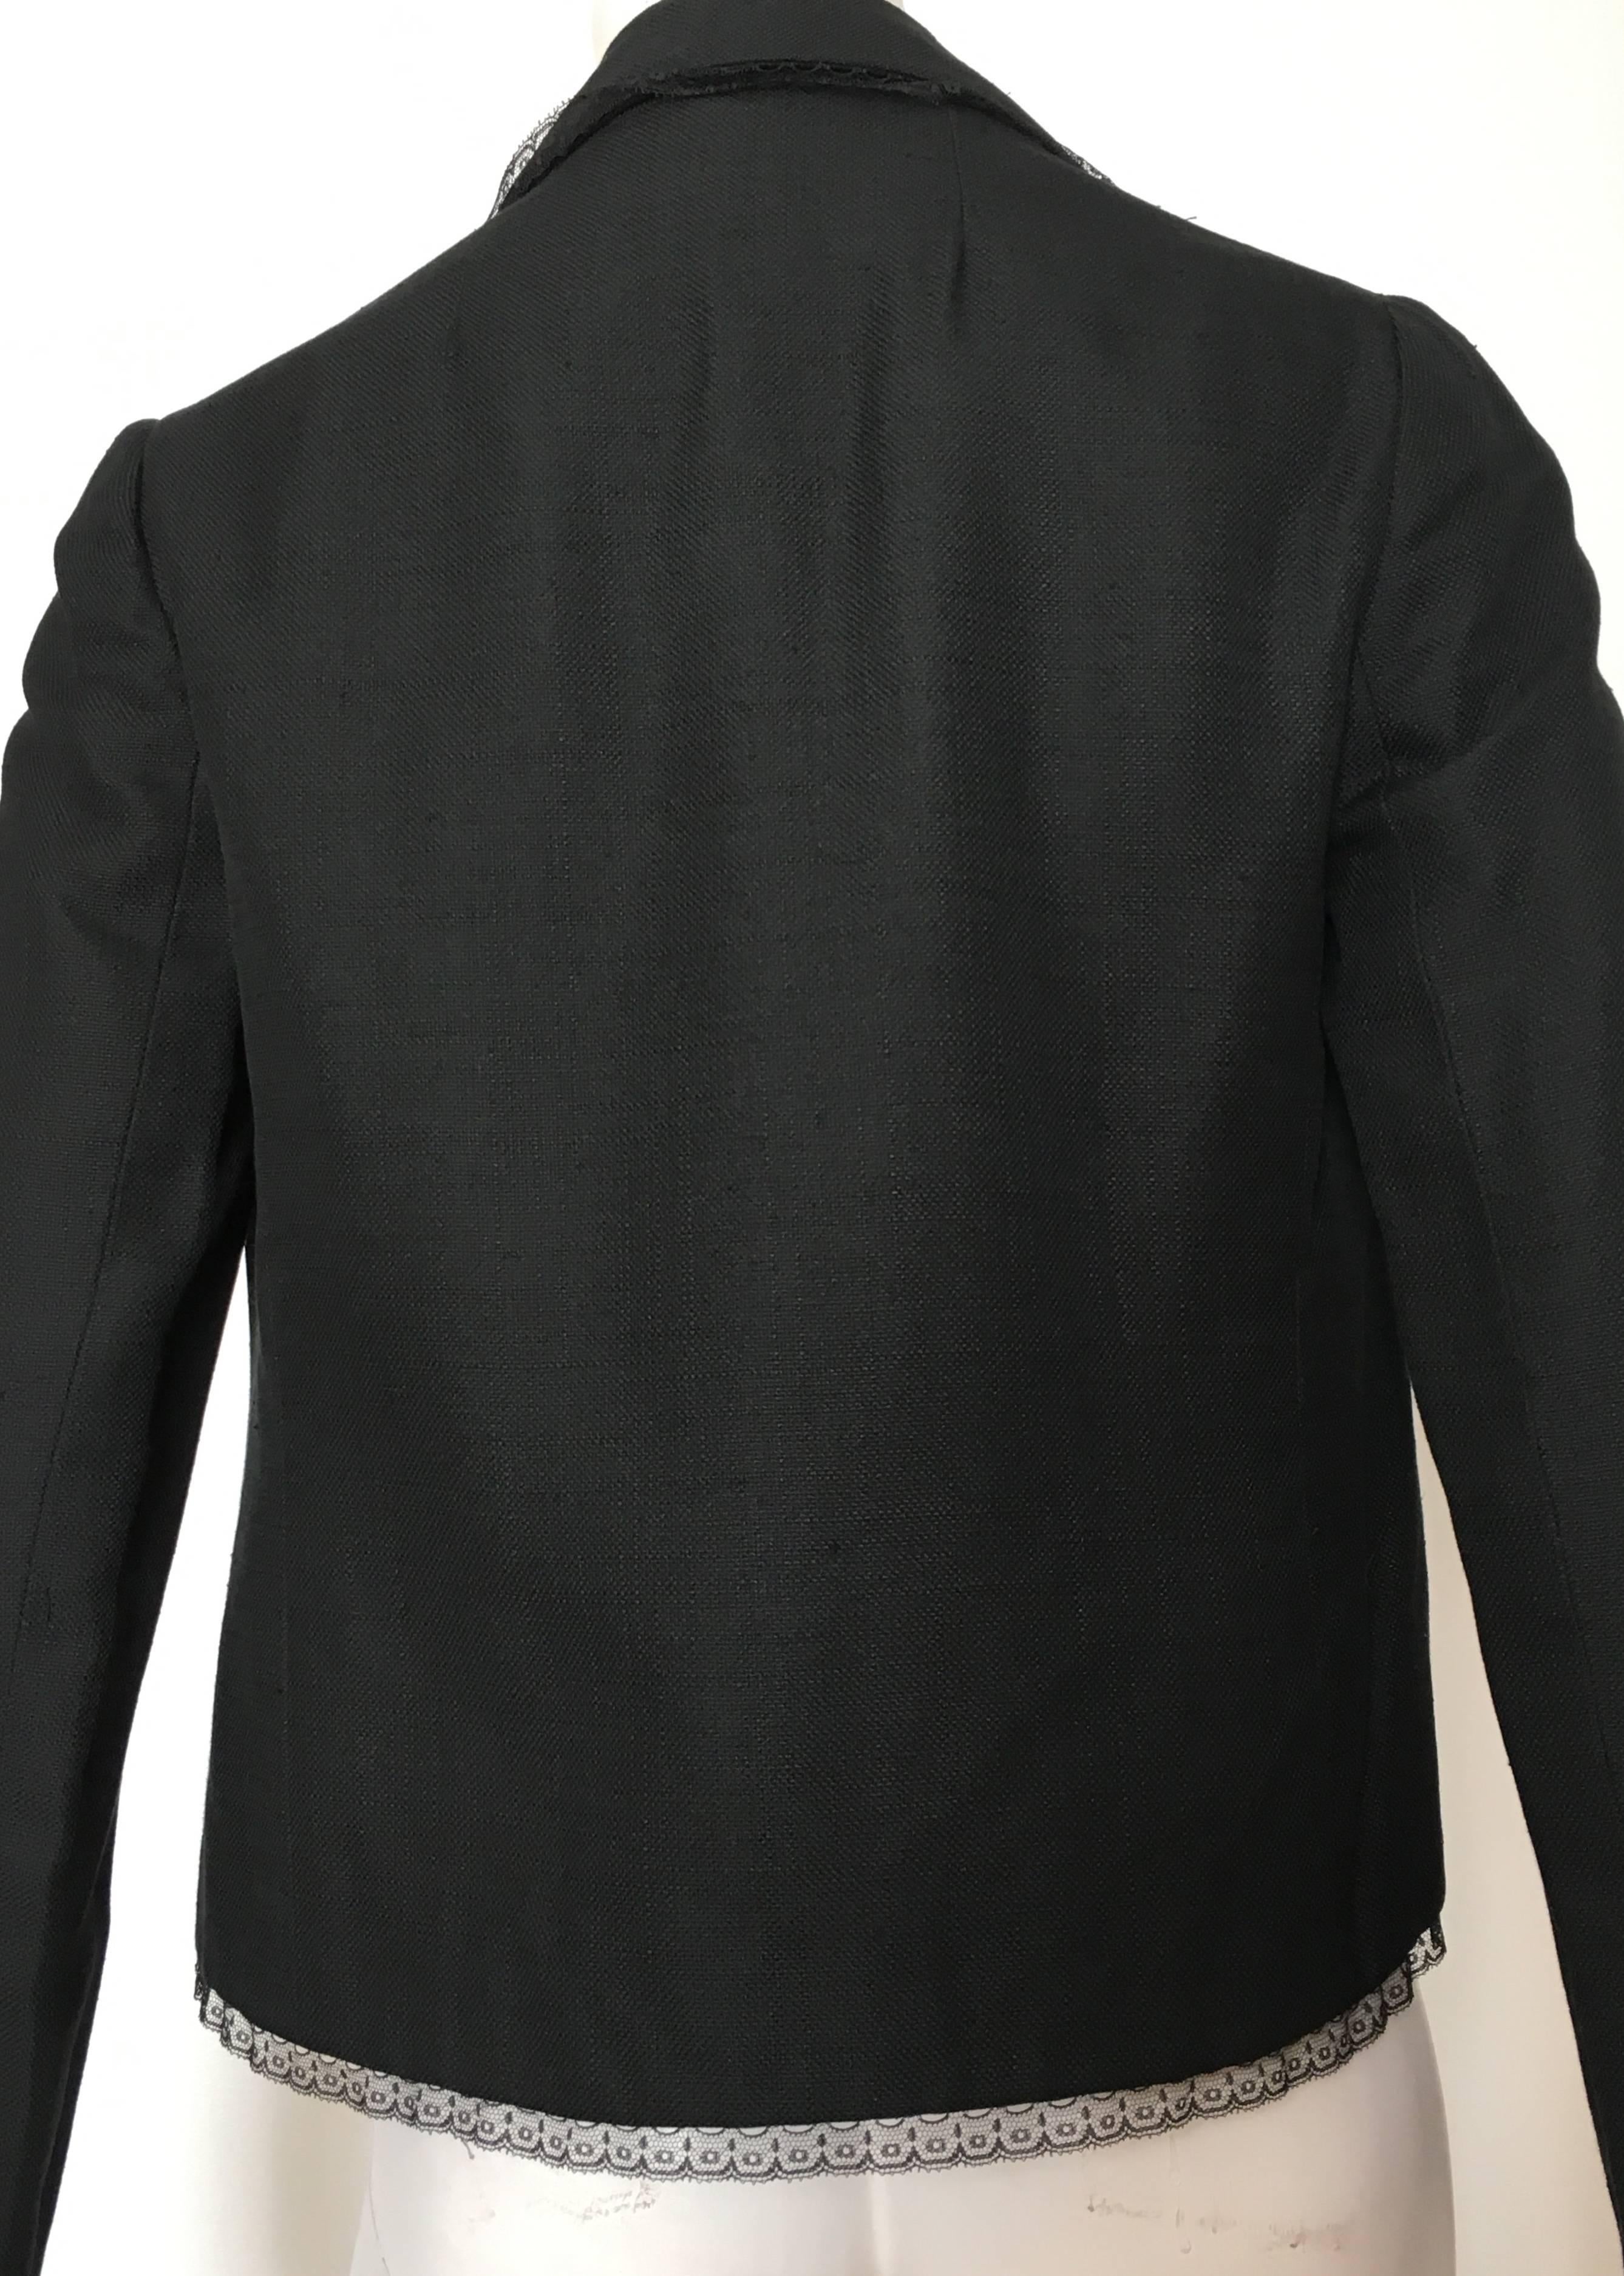 Bill Blass 1980s Black Linen with Lace Trim Jacket Size 8. For Sale 3